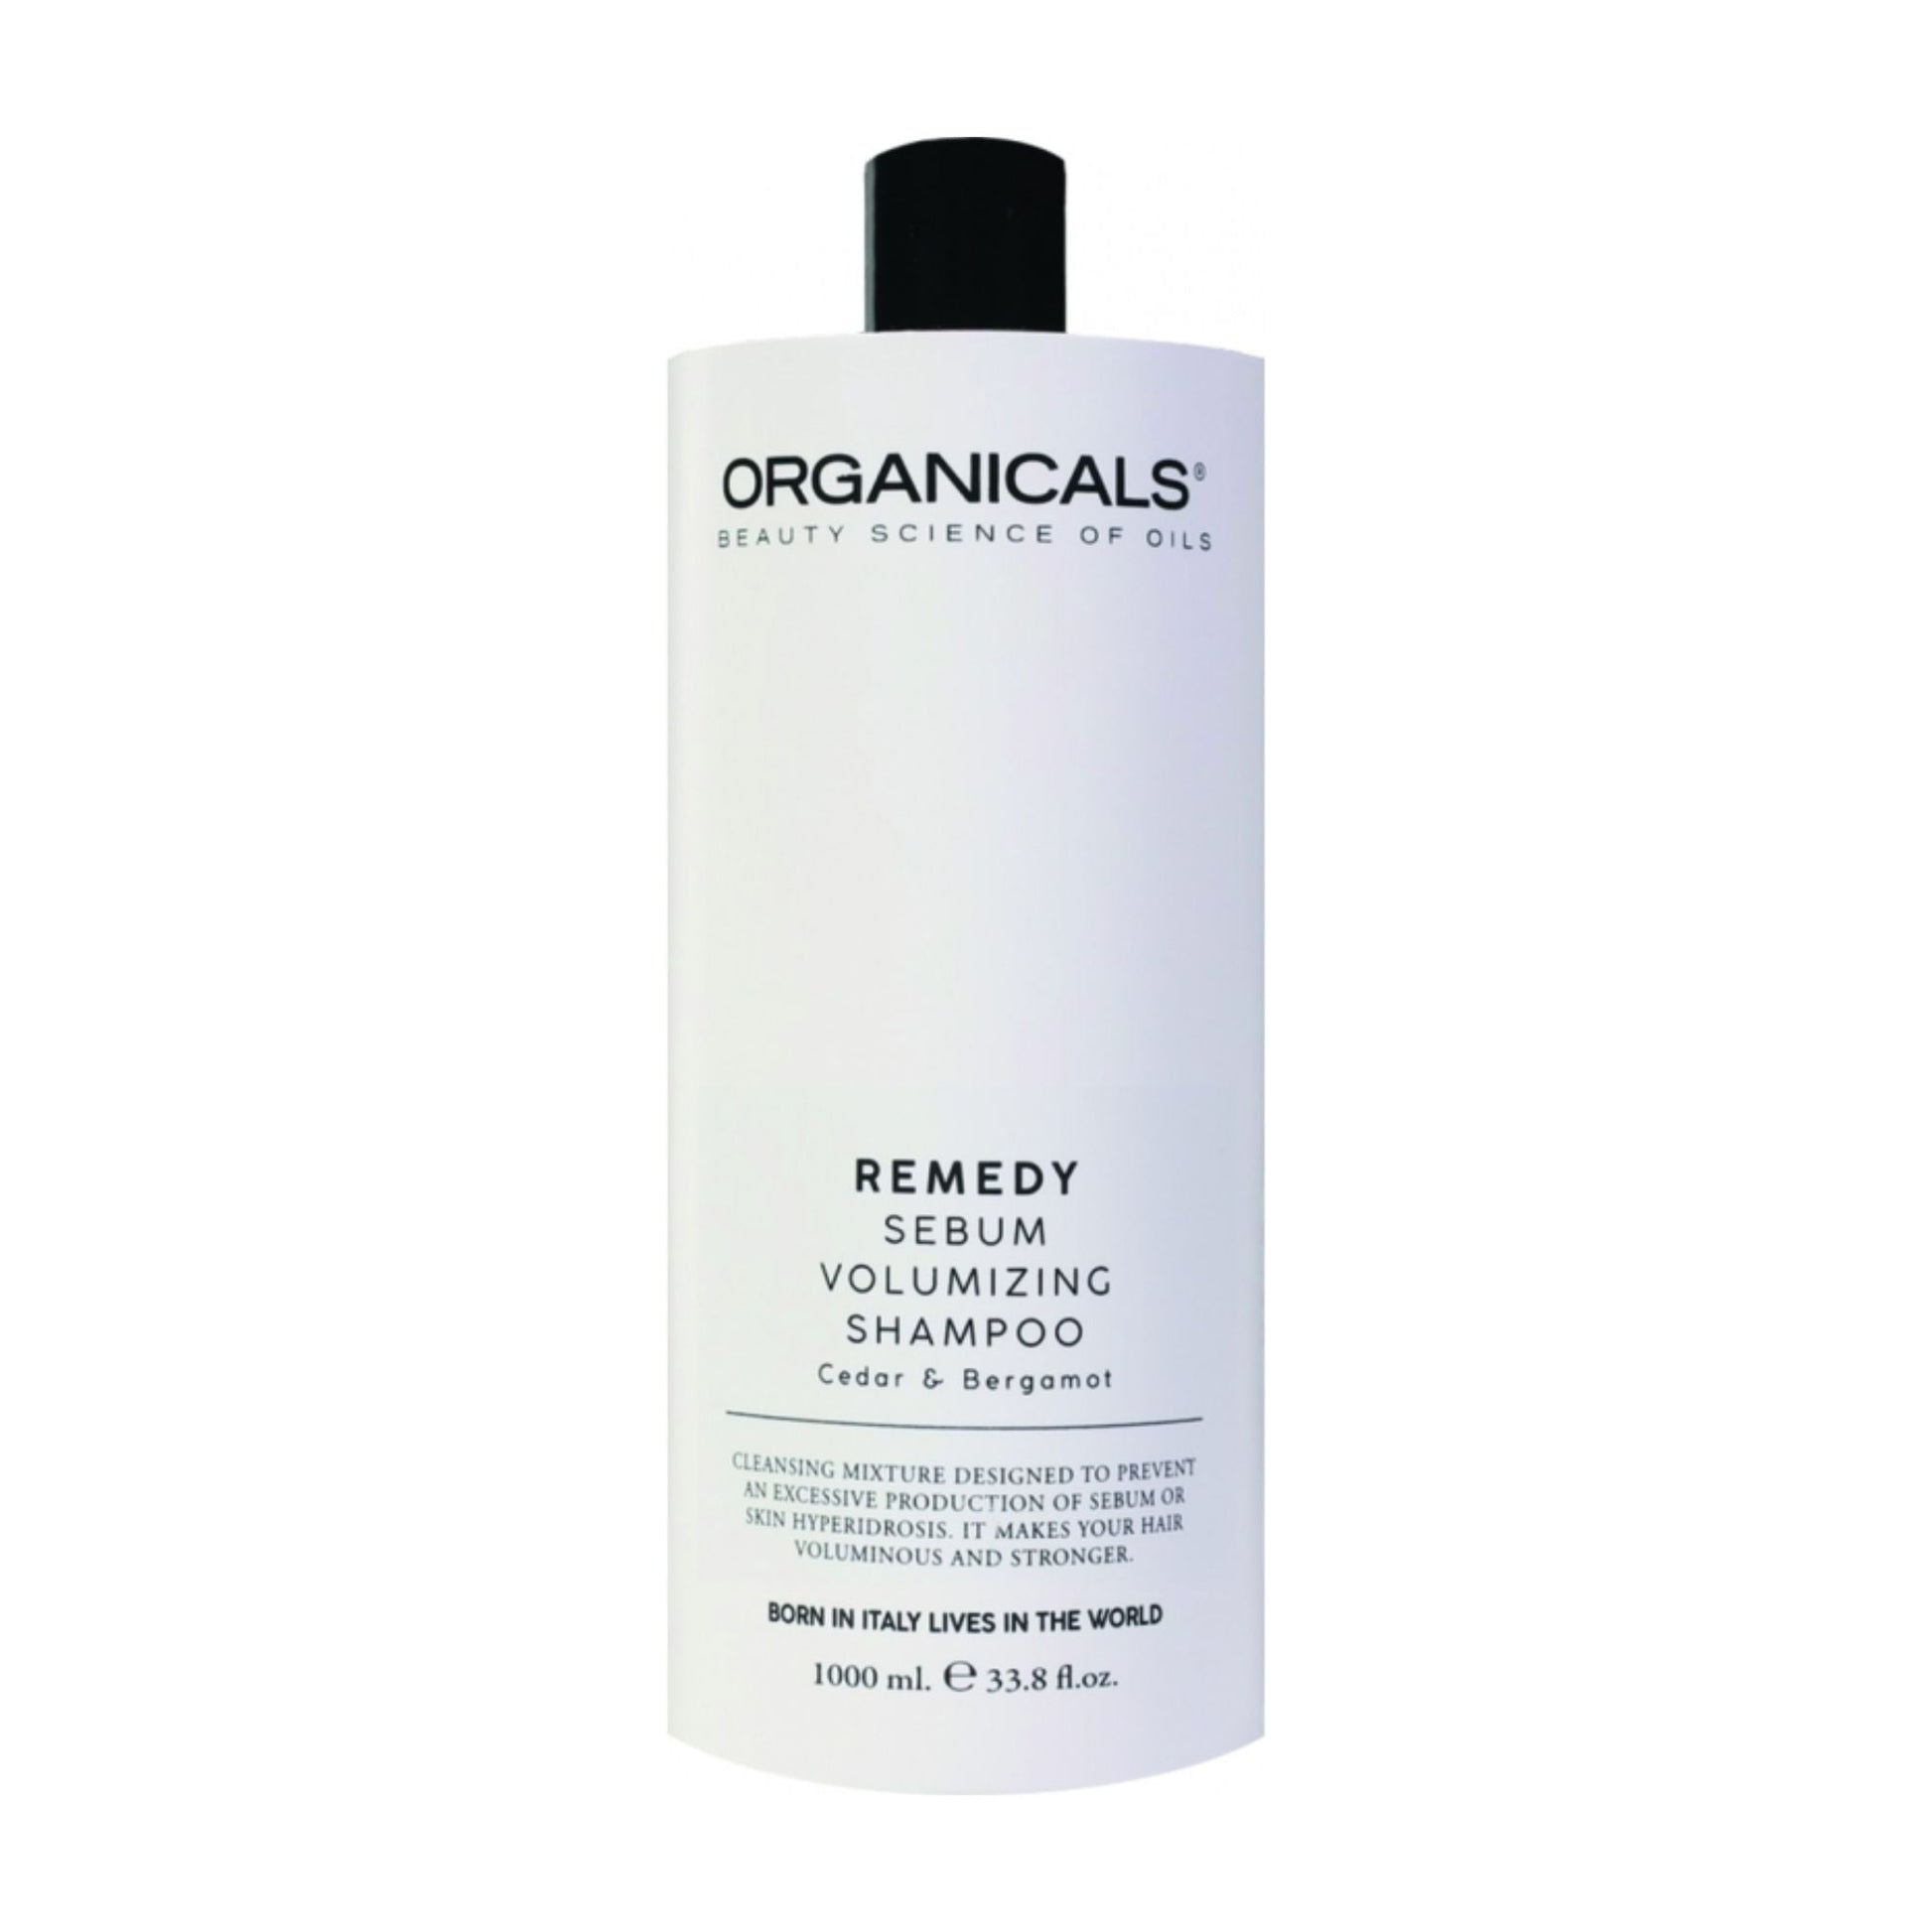 REMEDY Sebum Volumizing čistilen šampon za mastne lase ORGANICALS - Šamponi.si